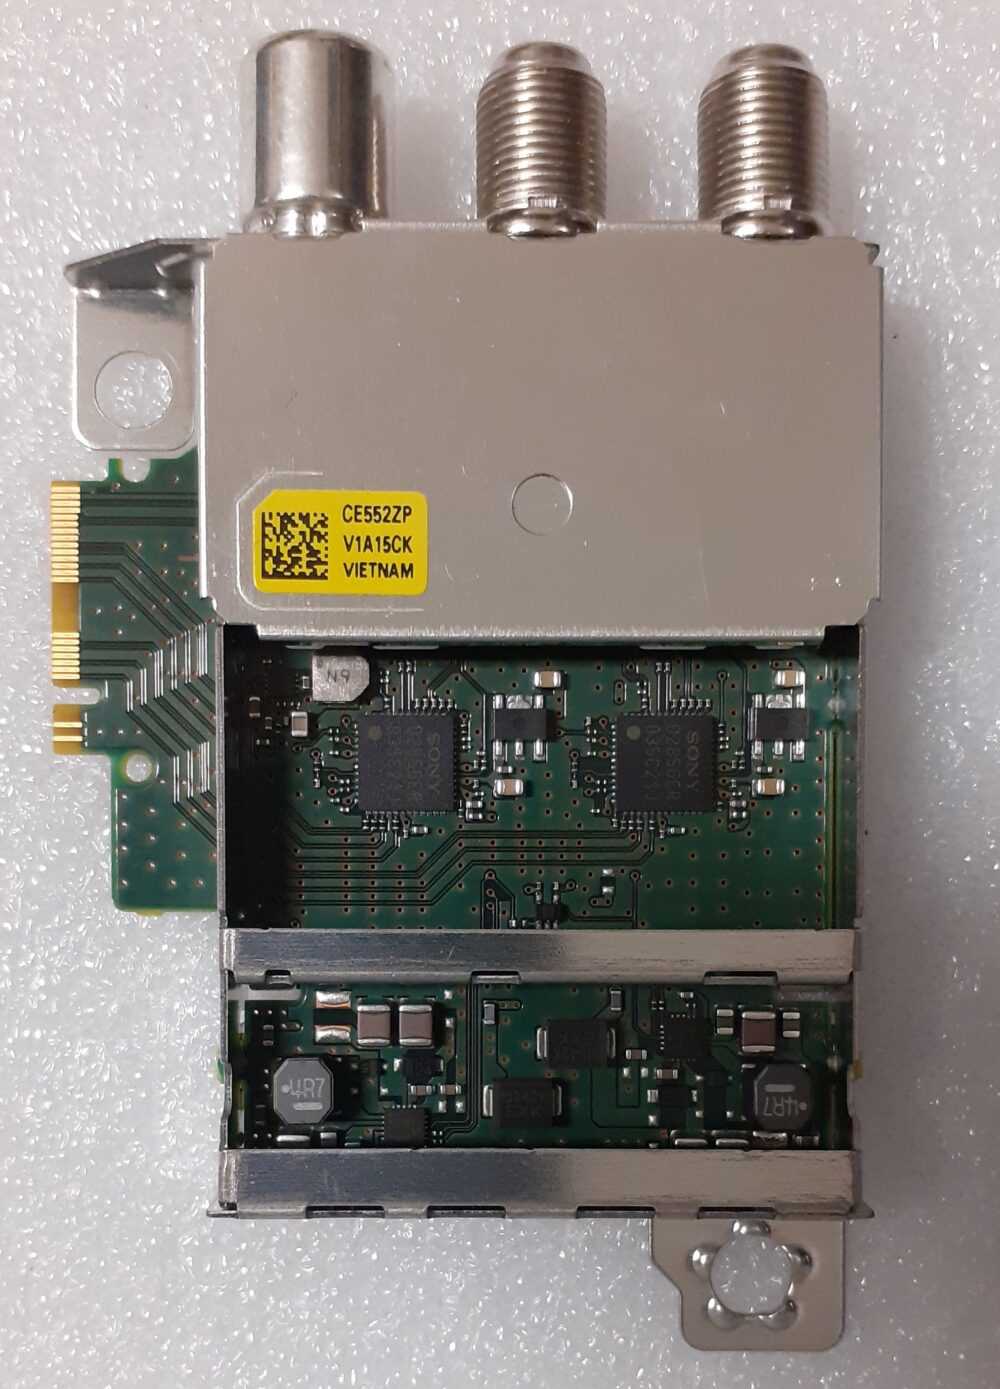 8-594-342-70 - CE552ZP - Modulo tuner Sony KD-43XH8596 TV Modules